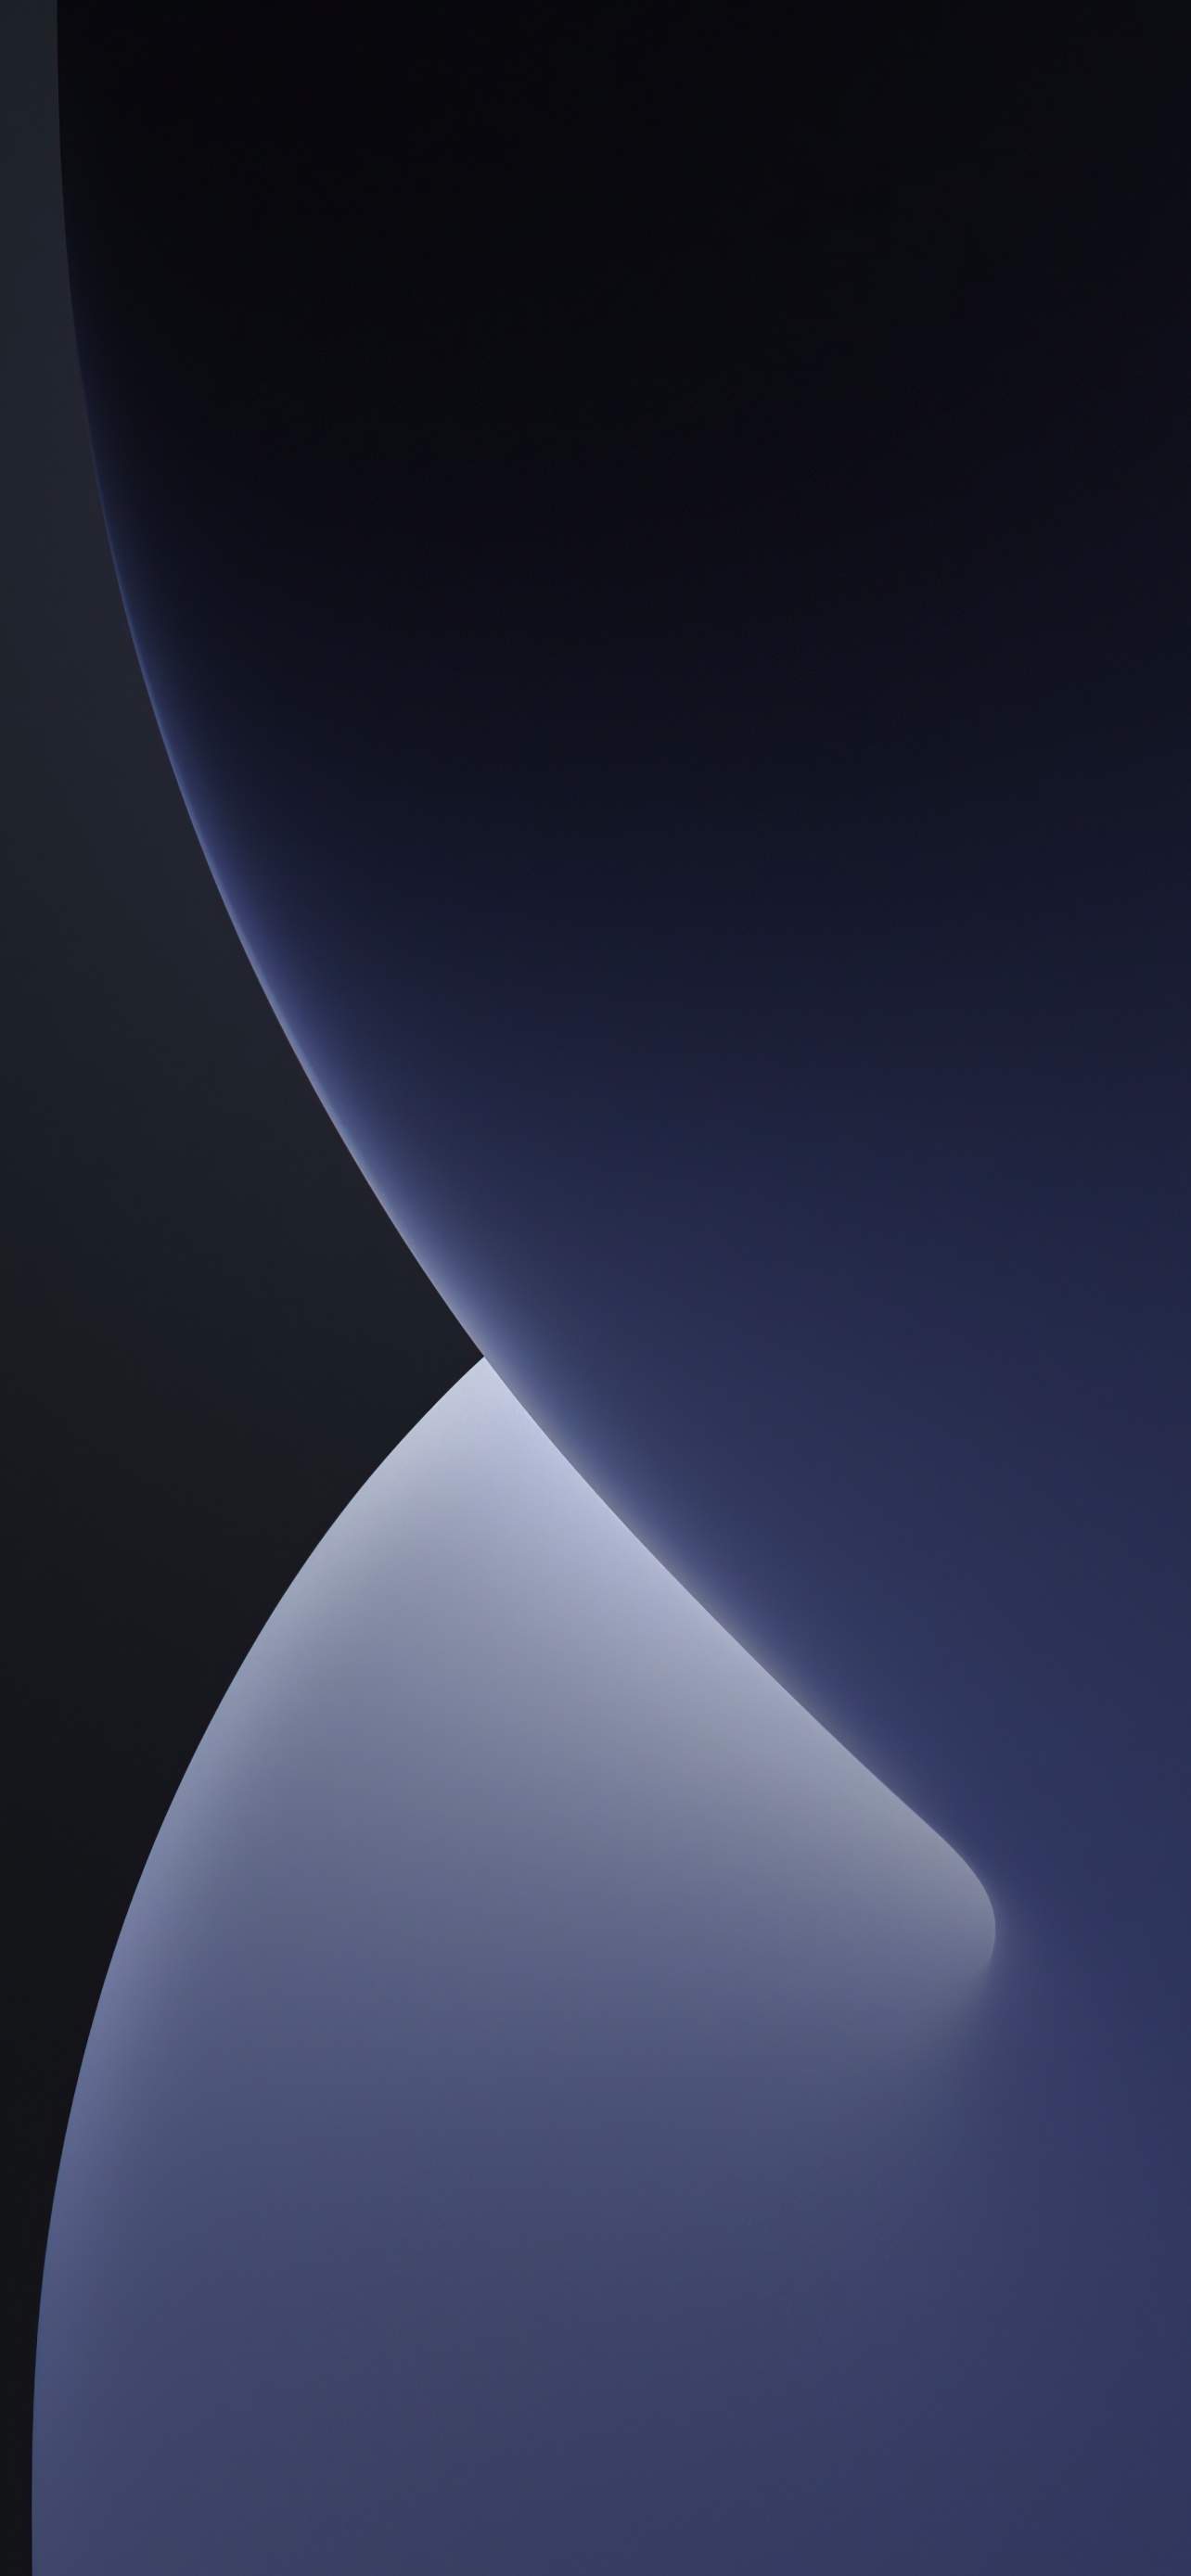 iOS 14 Wallpaper 4K, WWDC, iPhone iPadOS, Dark, Grey, Stock, Black /Dark